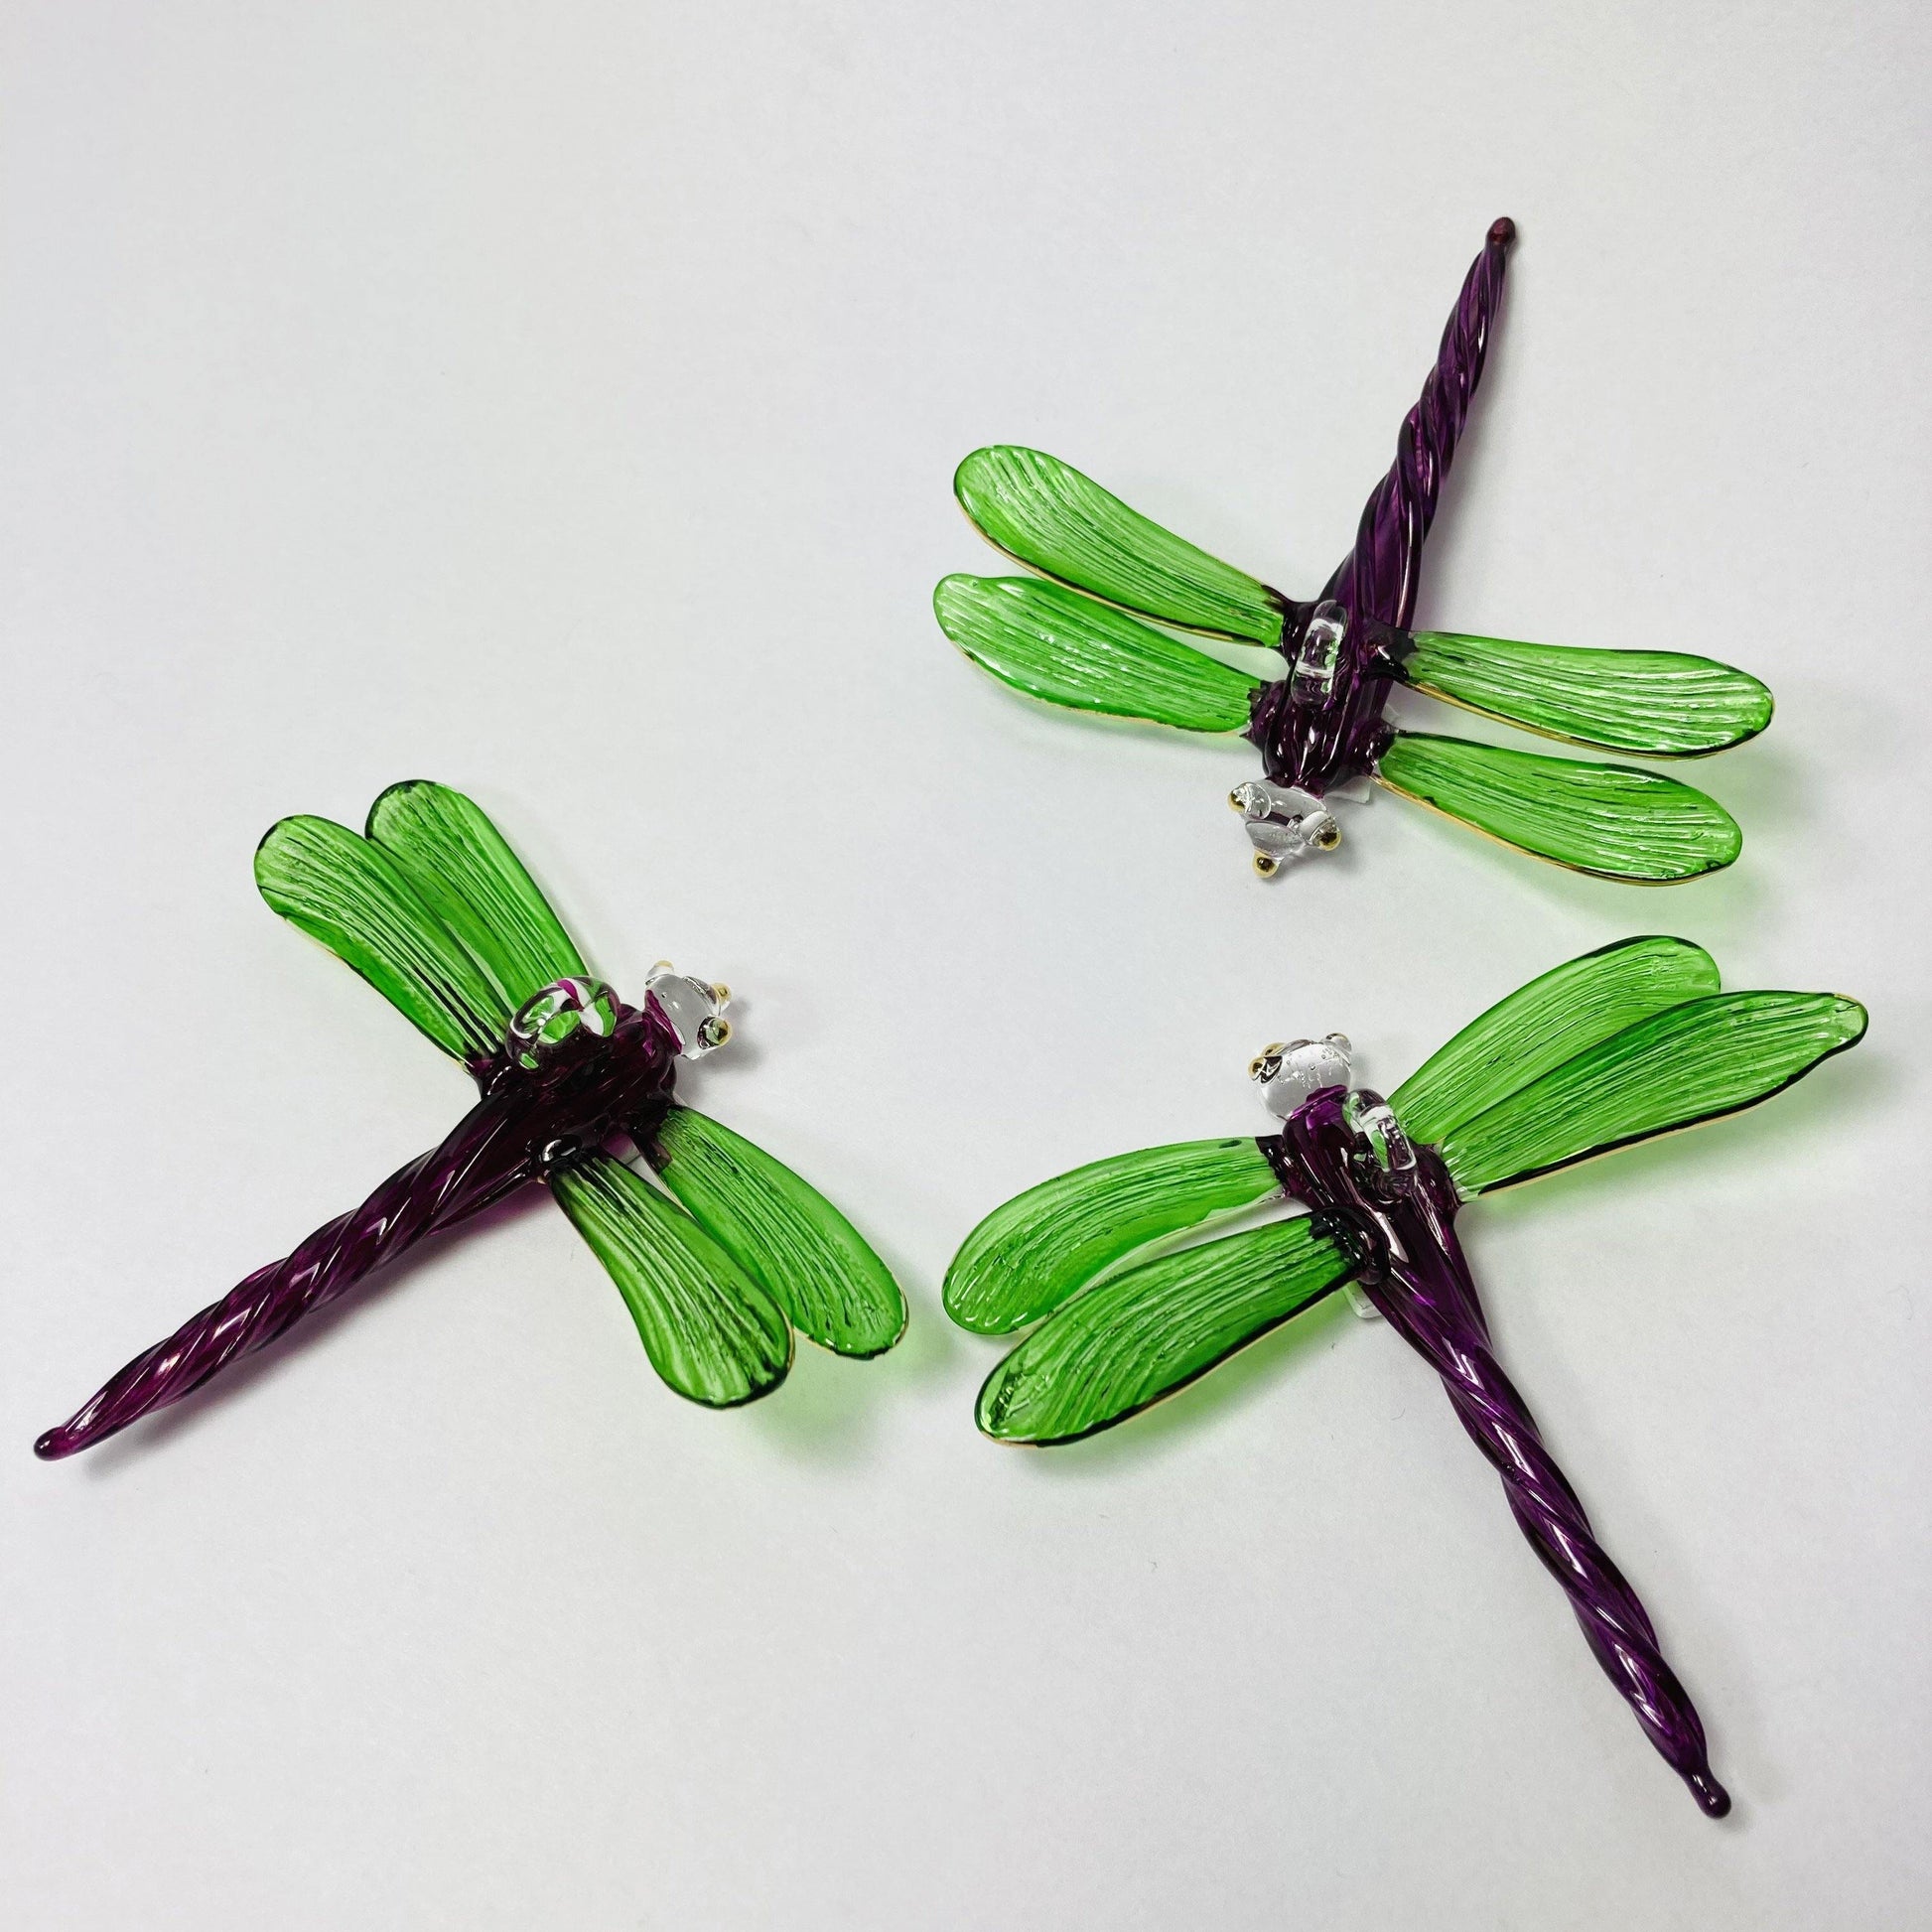 Blown Glass Ornament - Dragonfly Green & Purple